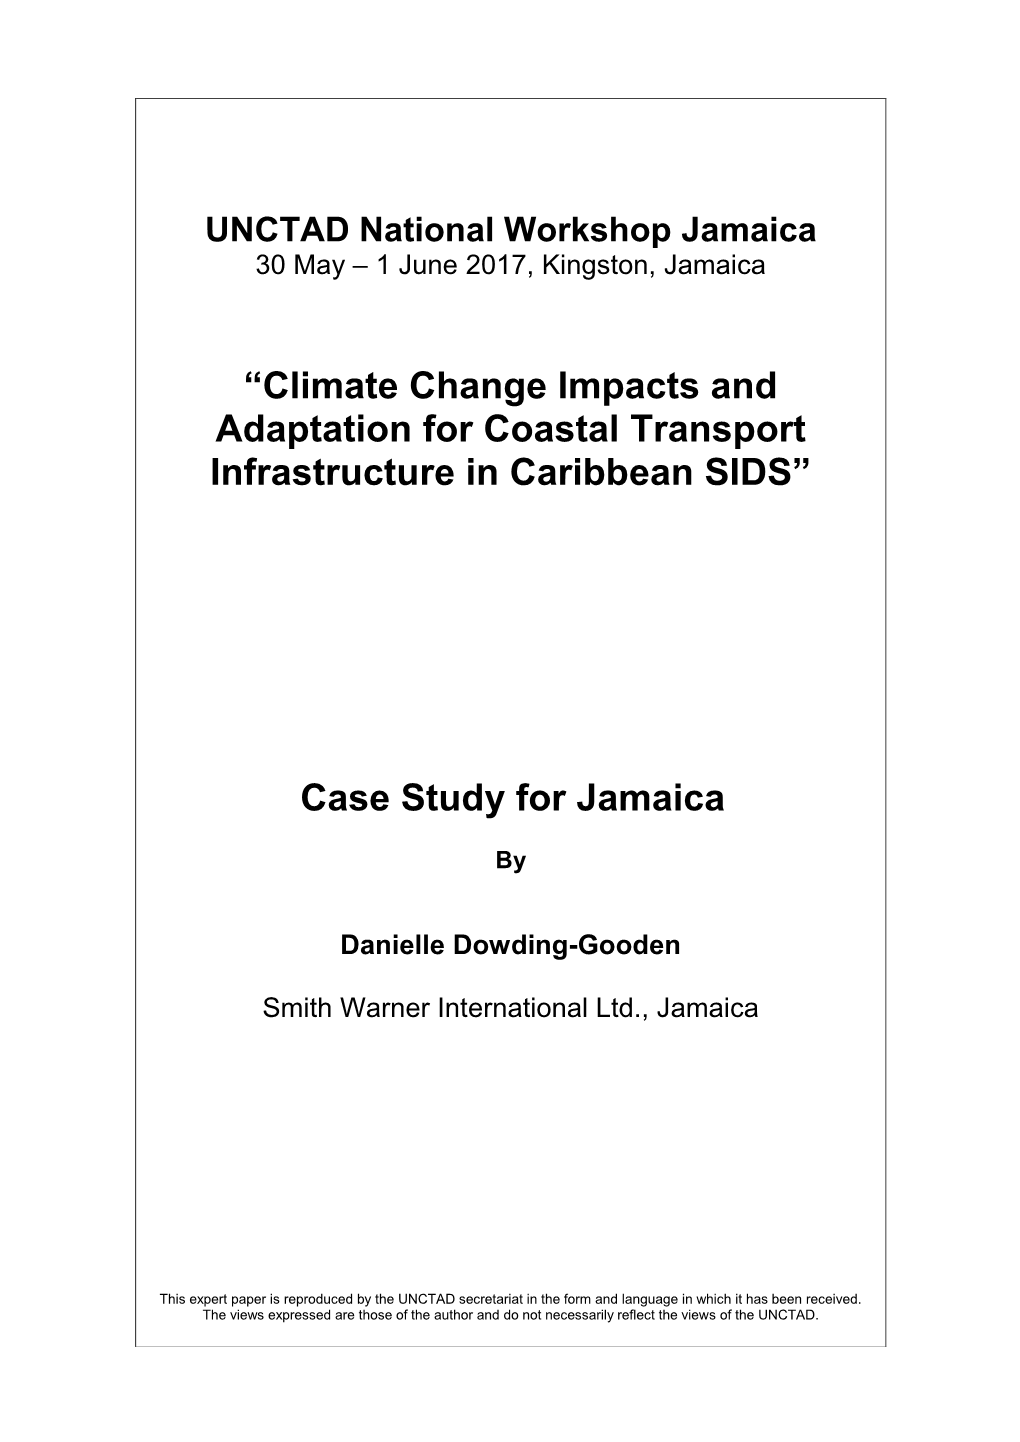 Case Study for Jamaica